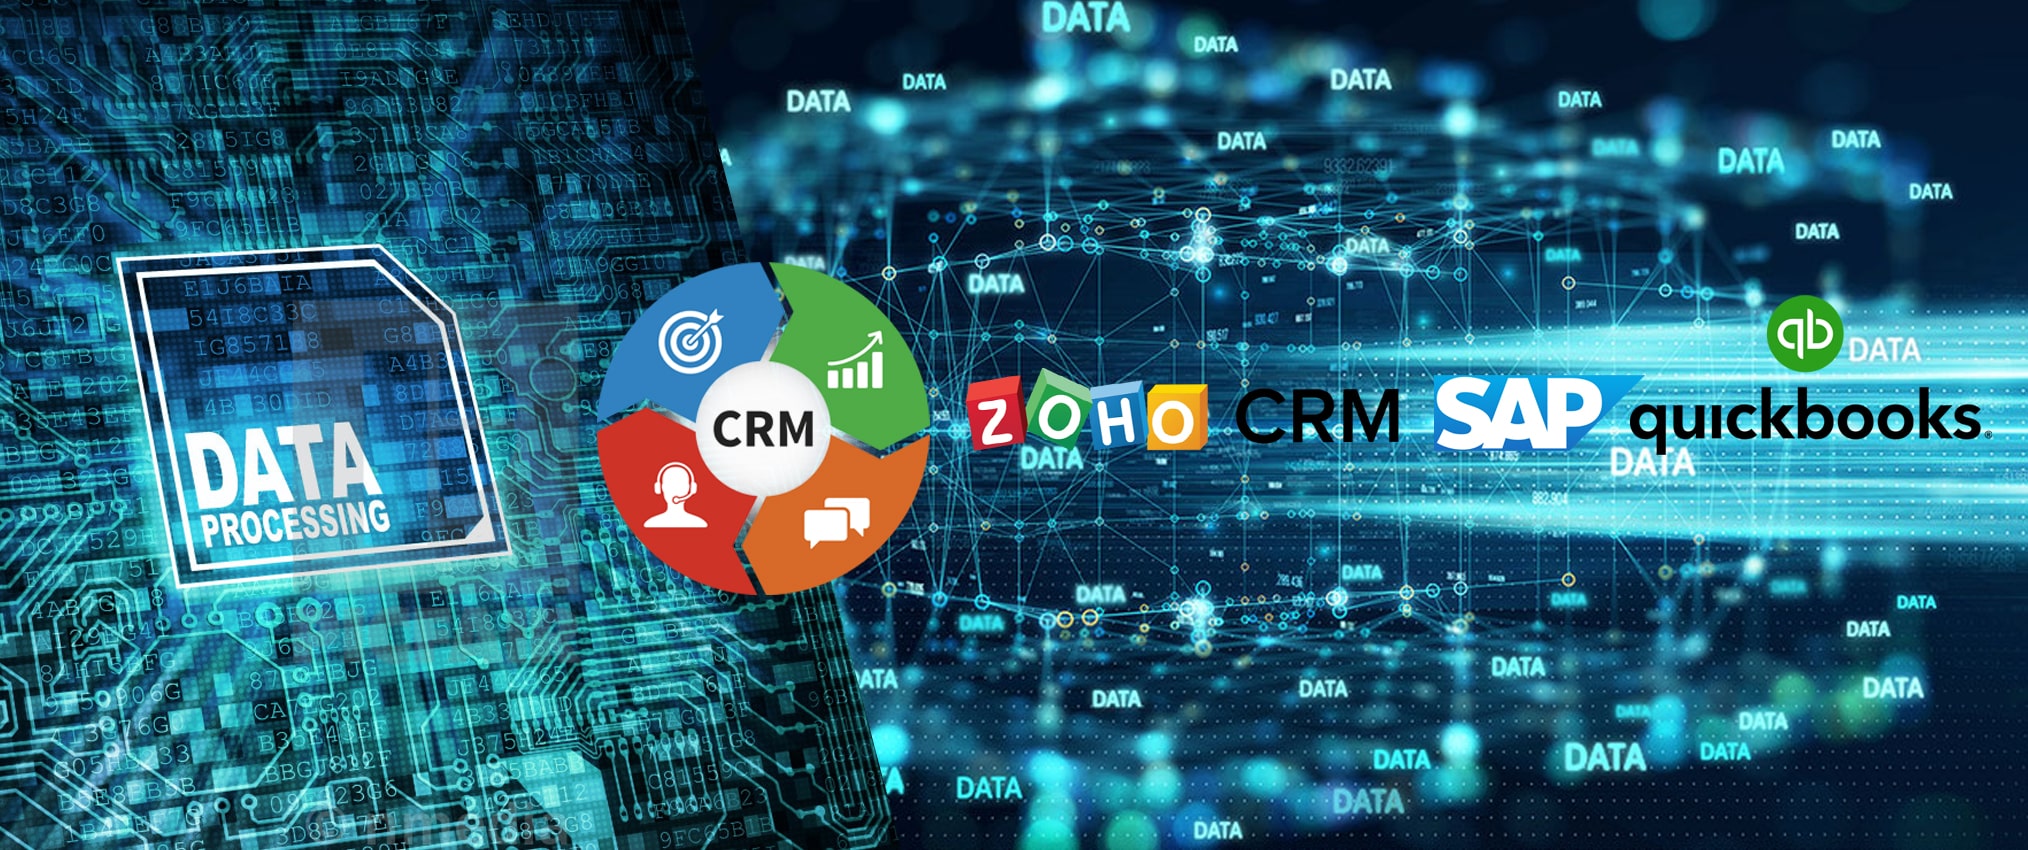 CRM data processing